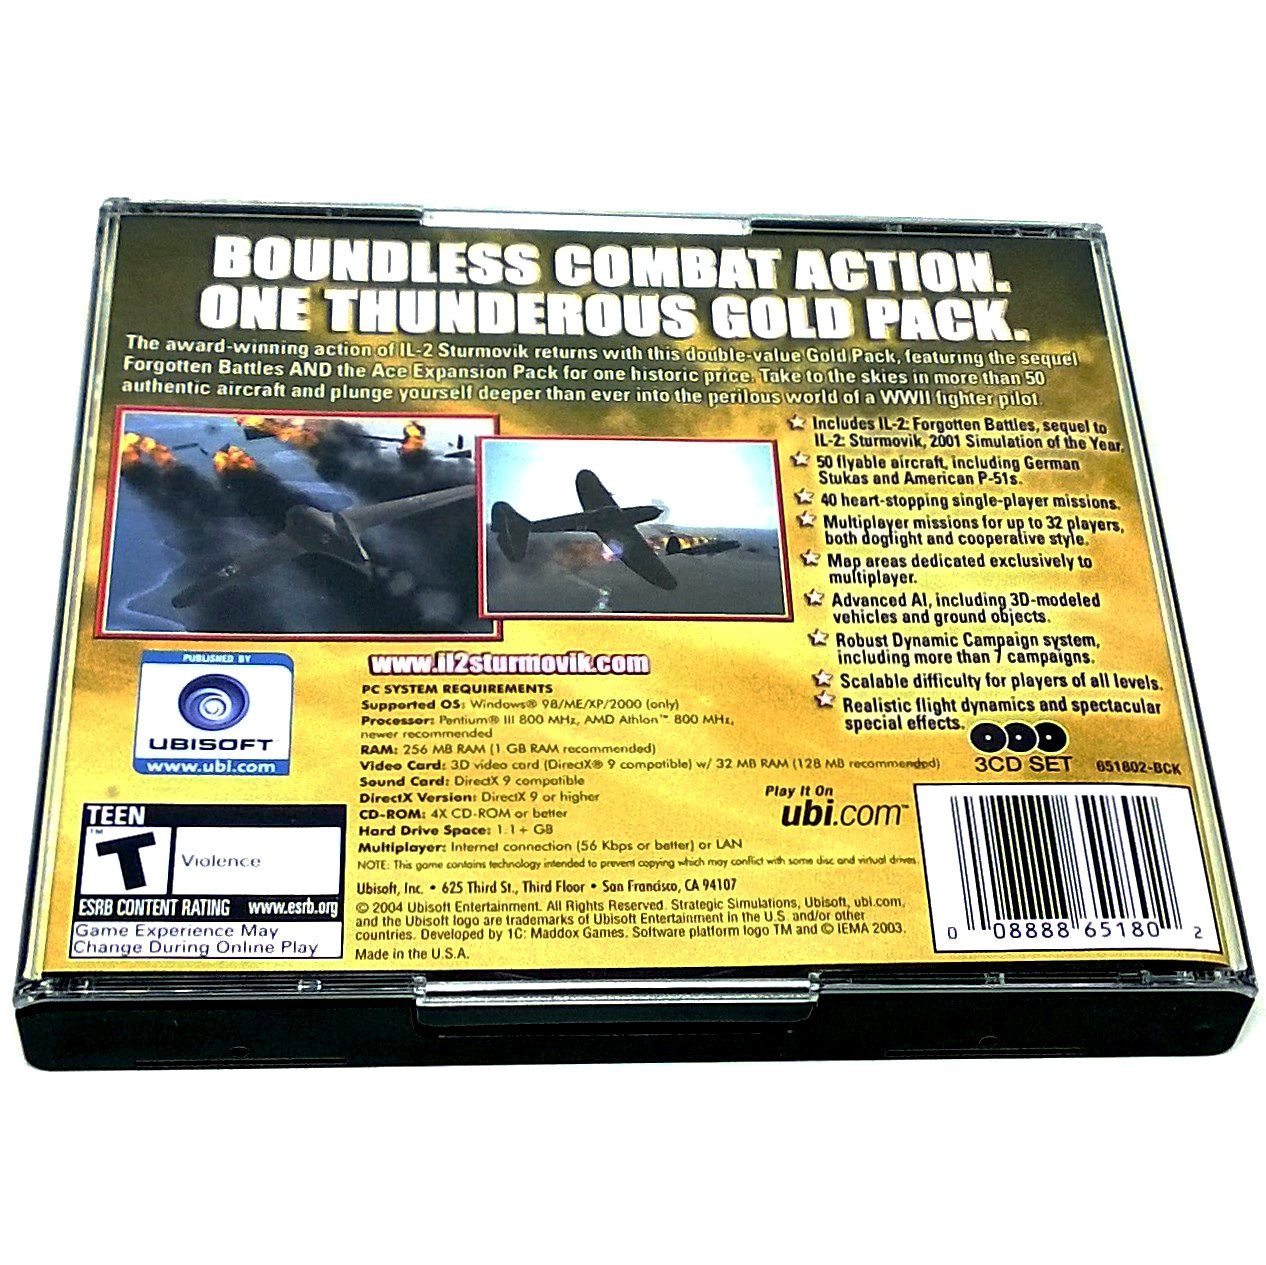 IL-2 Sturmovik: Forgotten Battles (Gold Pack Edition) for PC CD-ROM - Back of case